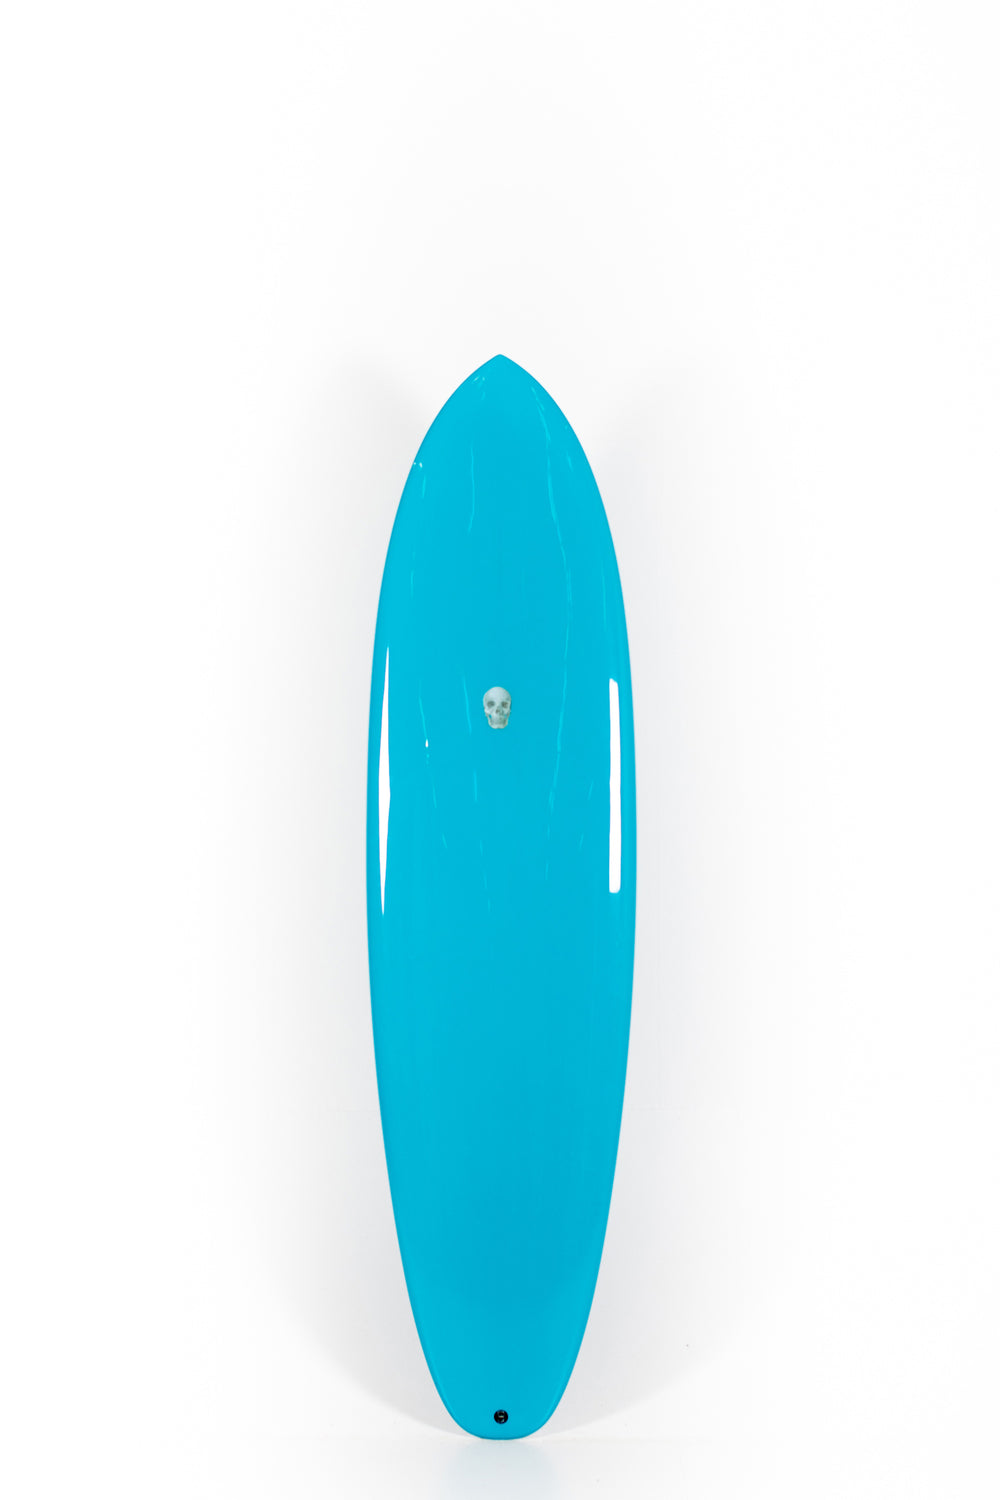 Pukas Surf shop - Christenson Surfboards - TWIN TRACKER - 7'0